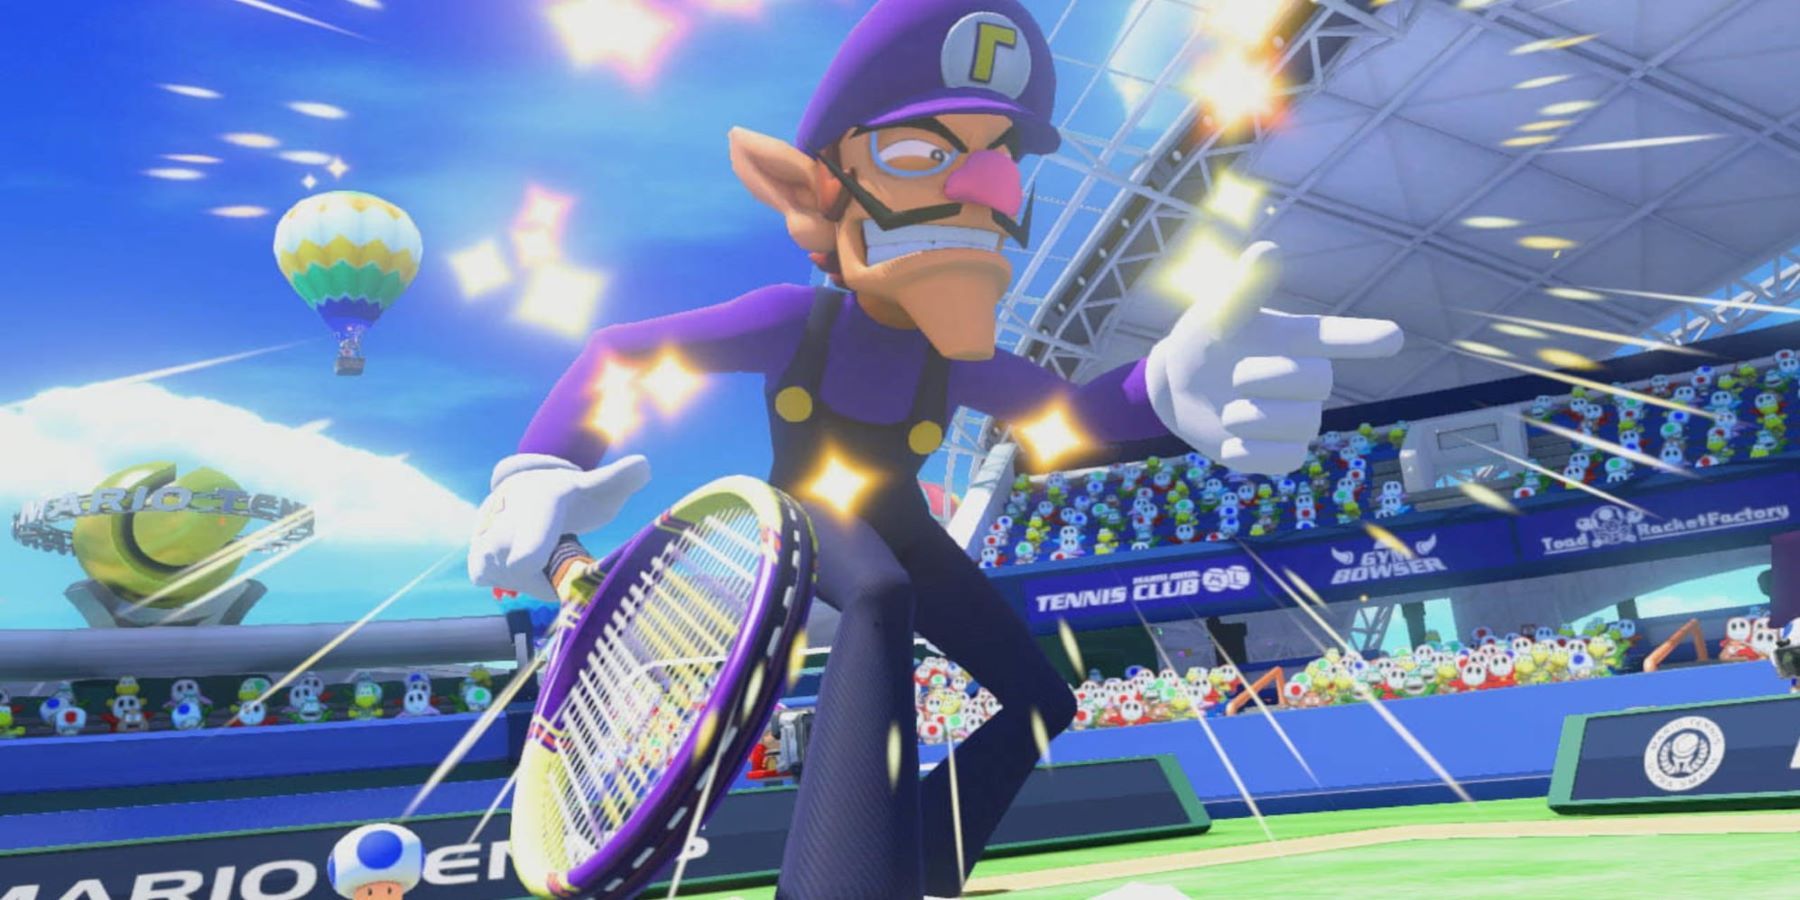 Waluigi holding a tennis racket, striking a pose, and sparkling in Mario Tennis: Ultra Smash